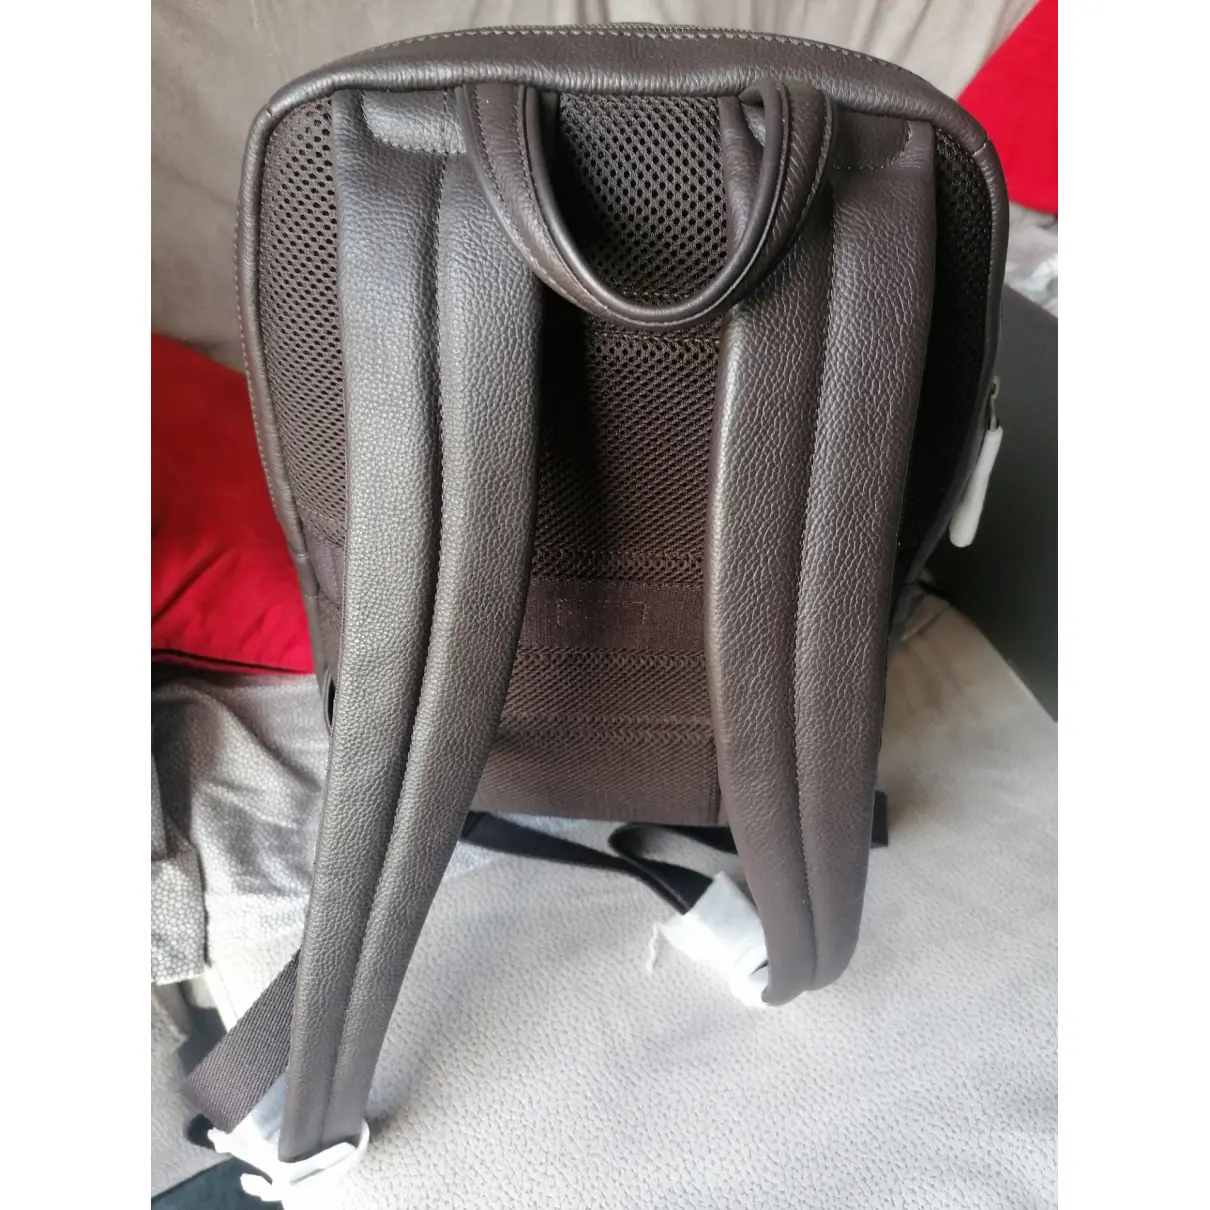 Buy Piquadro Leather bag online